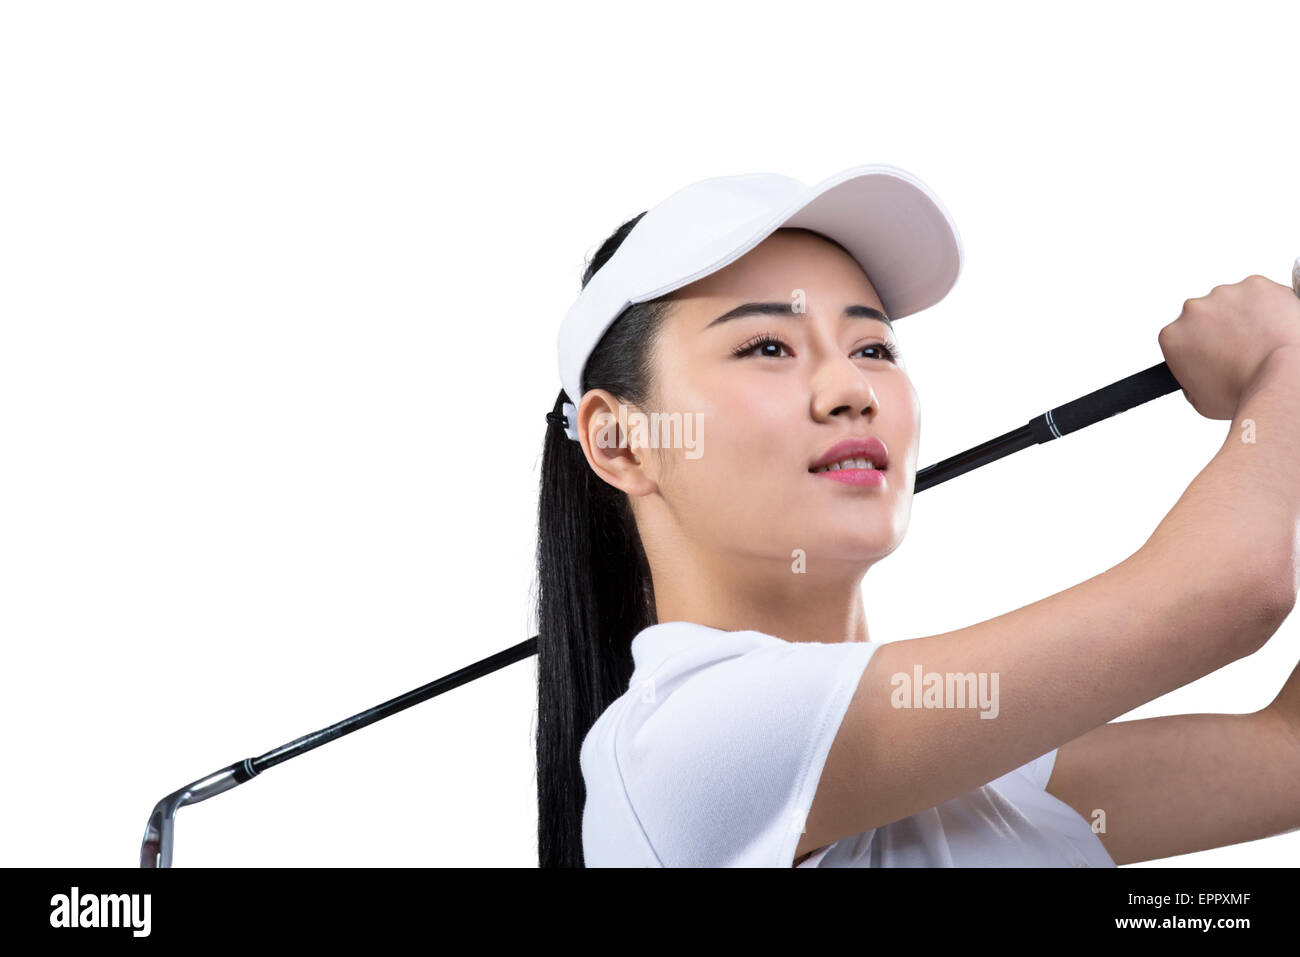 Young female golfer swinging golf club Stock Photo